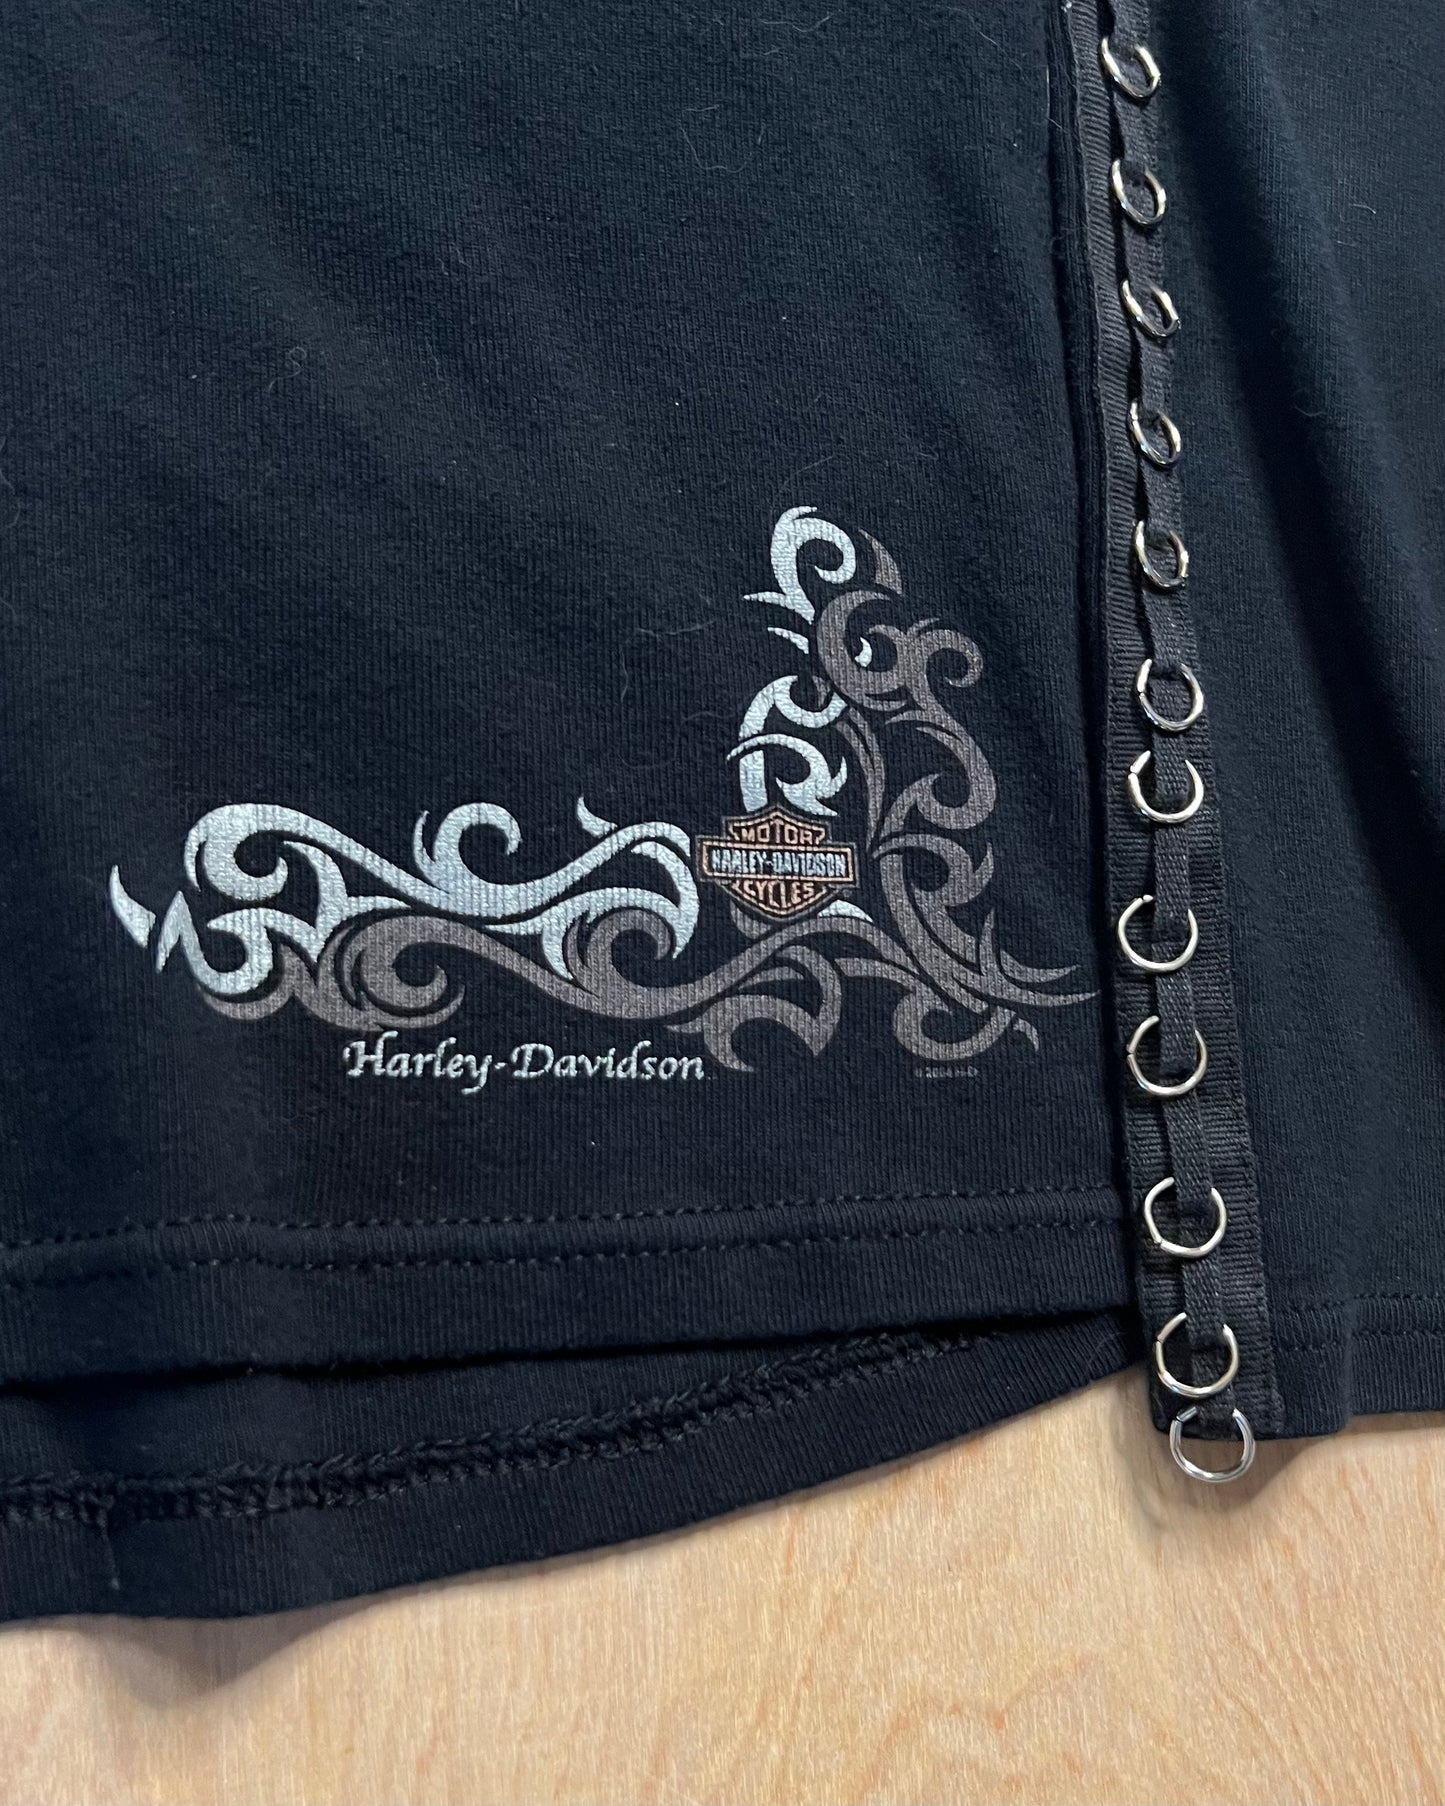 2004 Harley Davidson Rings Naples, Florida Long Sleeve